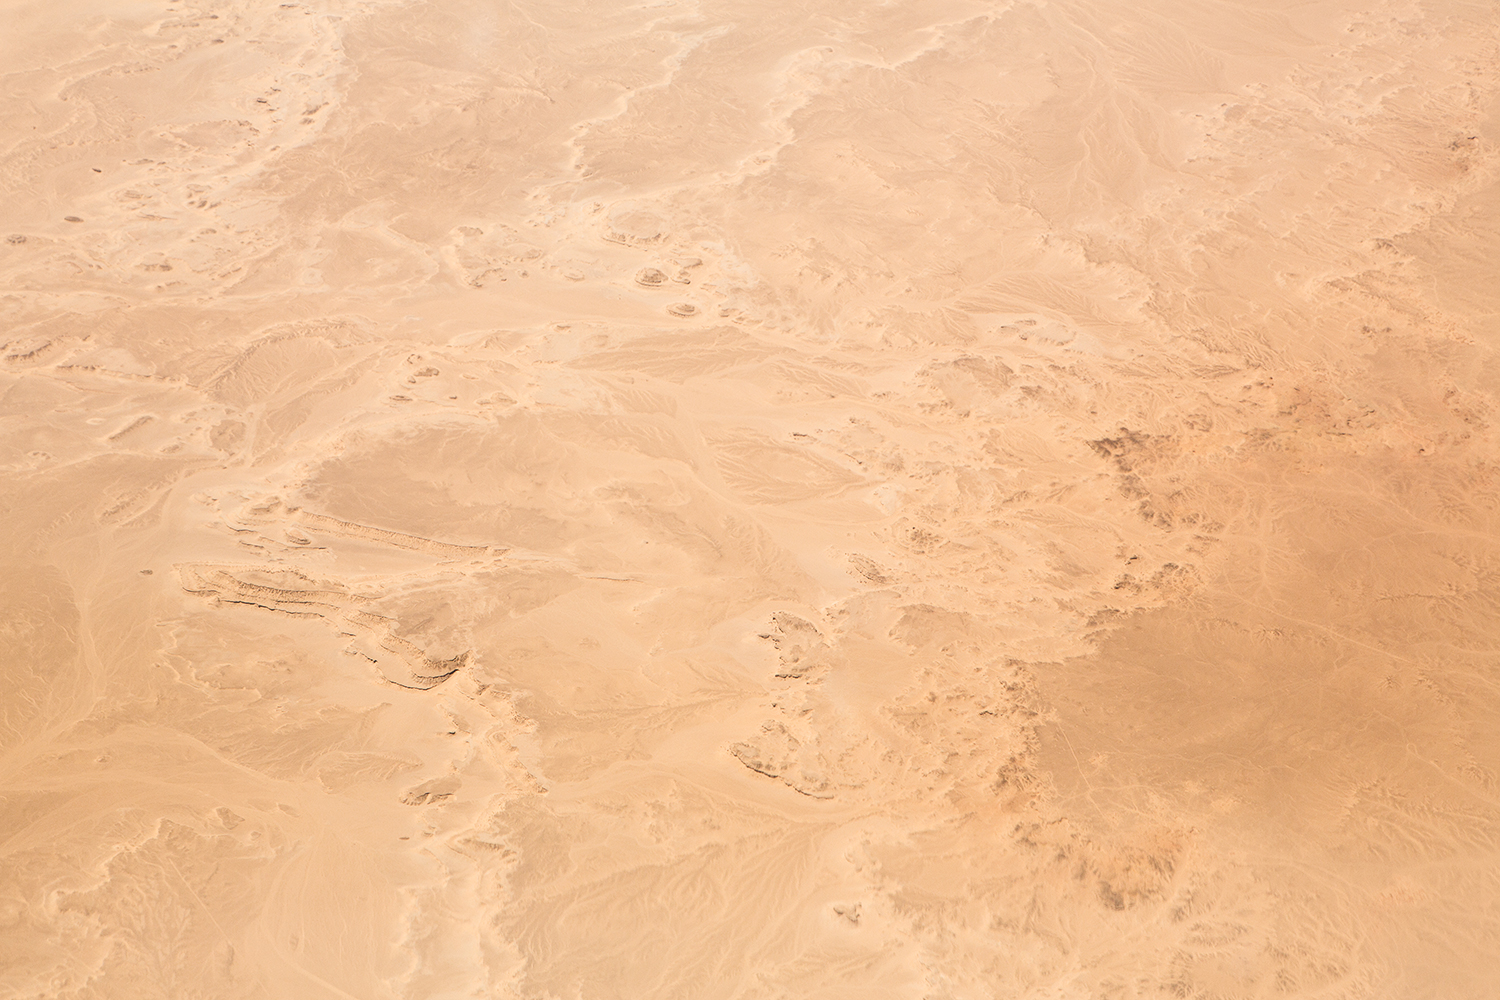  Deserts V, 2015 //  120 cm x 180 cm  